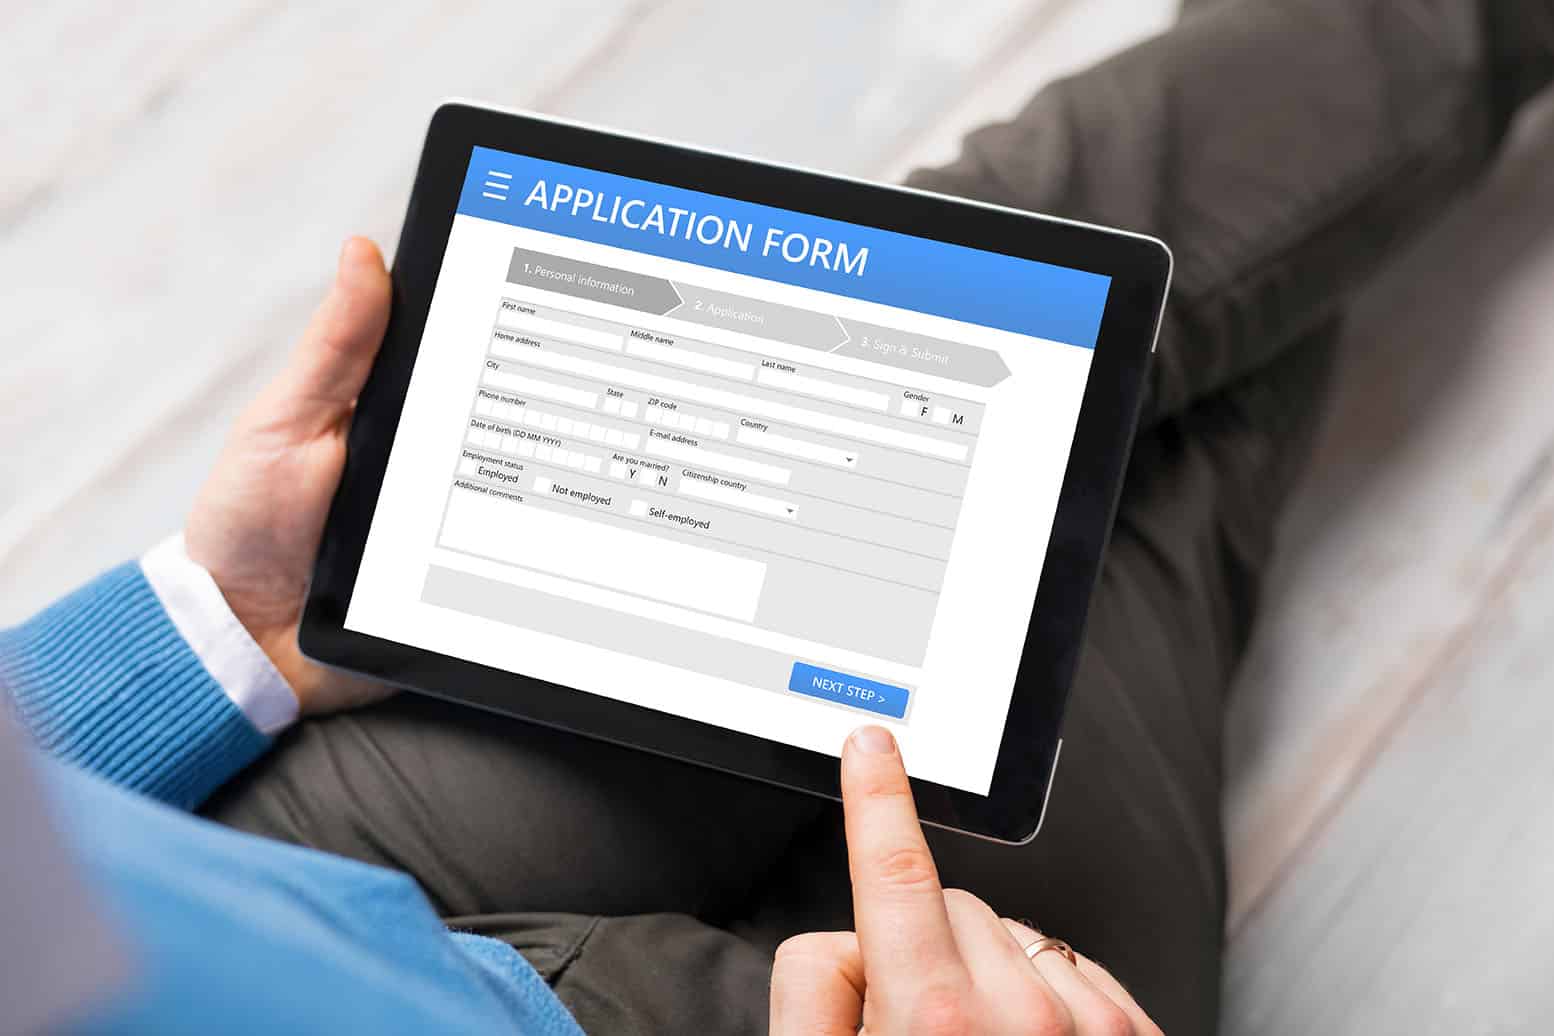 Sample application form on tablet computer